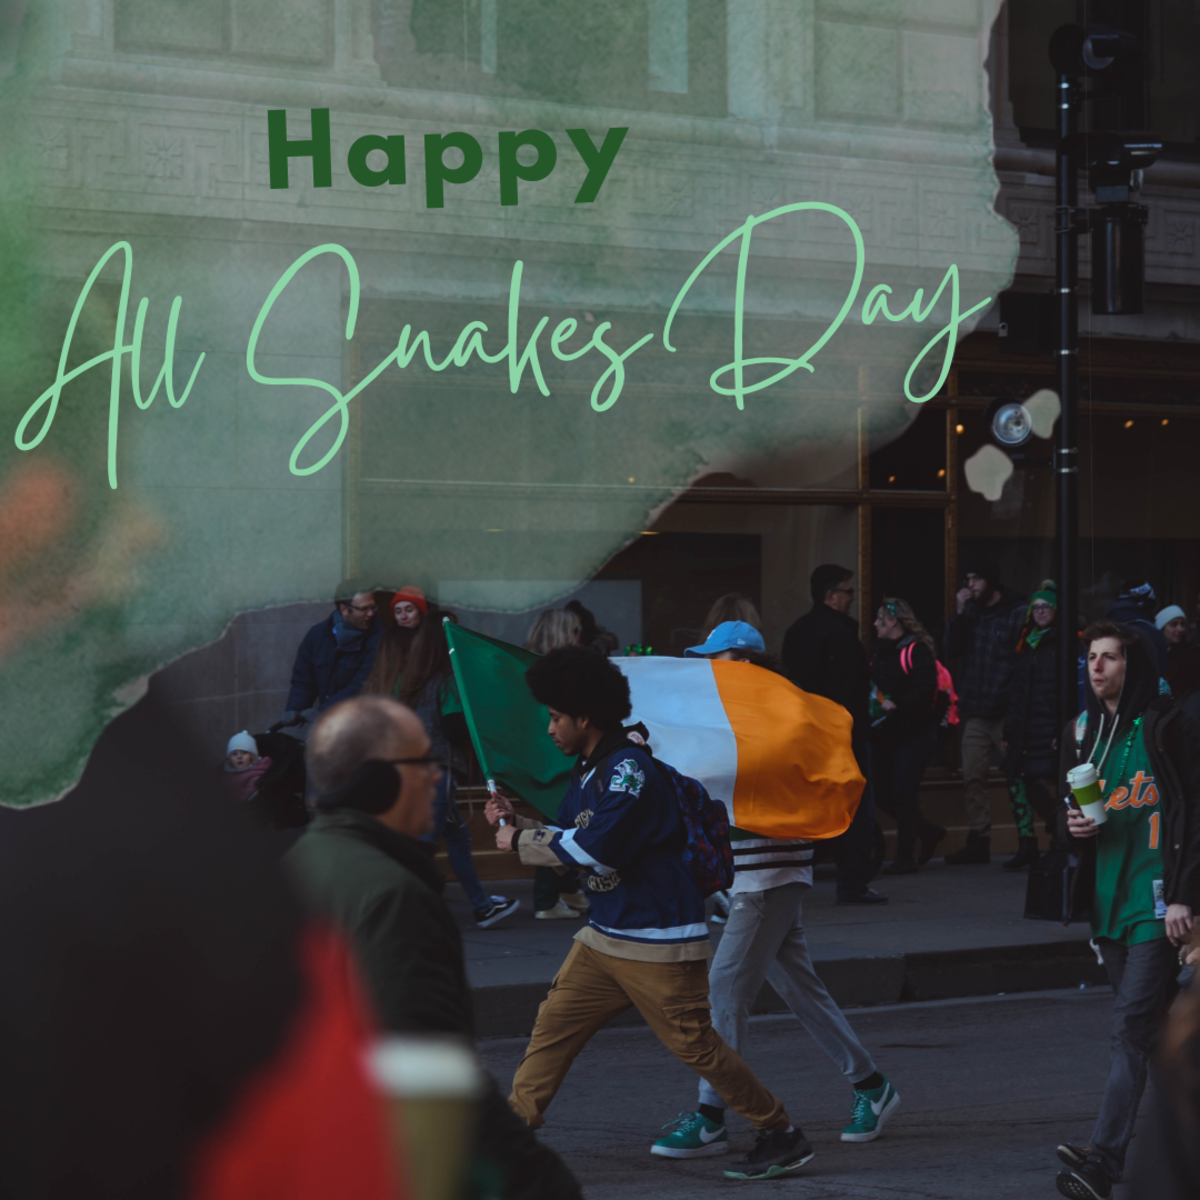 All Snakes Day: A Pagan St. Patrick's Day Celebration